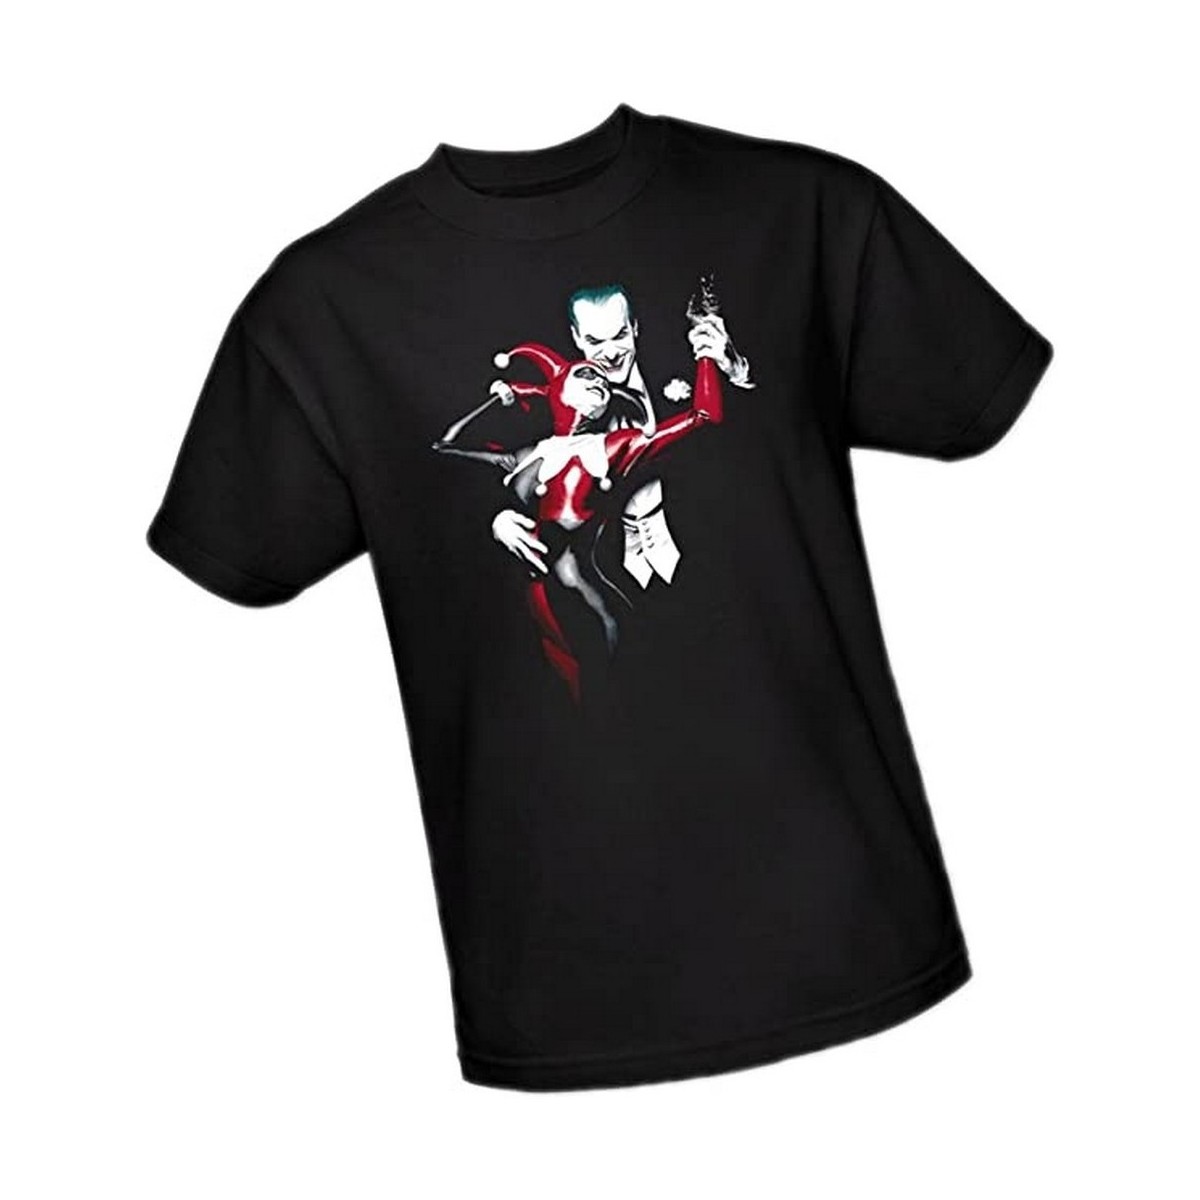 Vêtements Homme T-shirts manches longues Dessins Animés Joker & Harley Noir